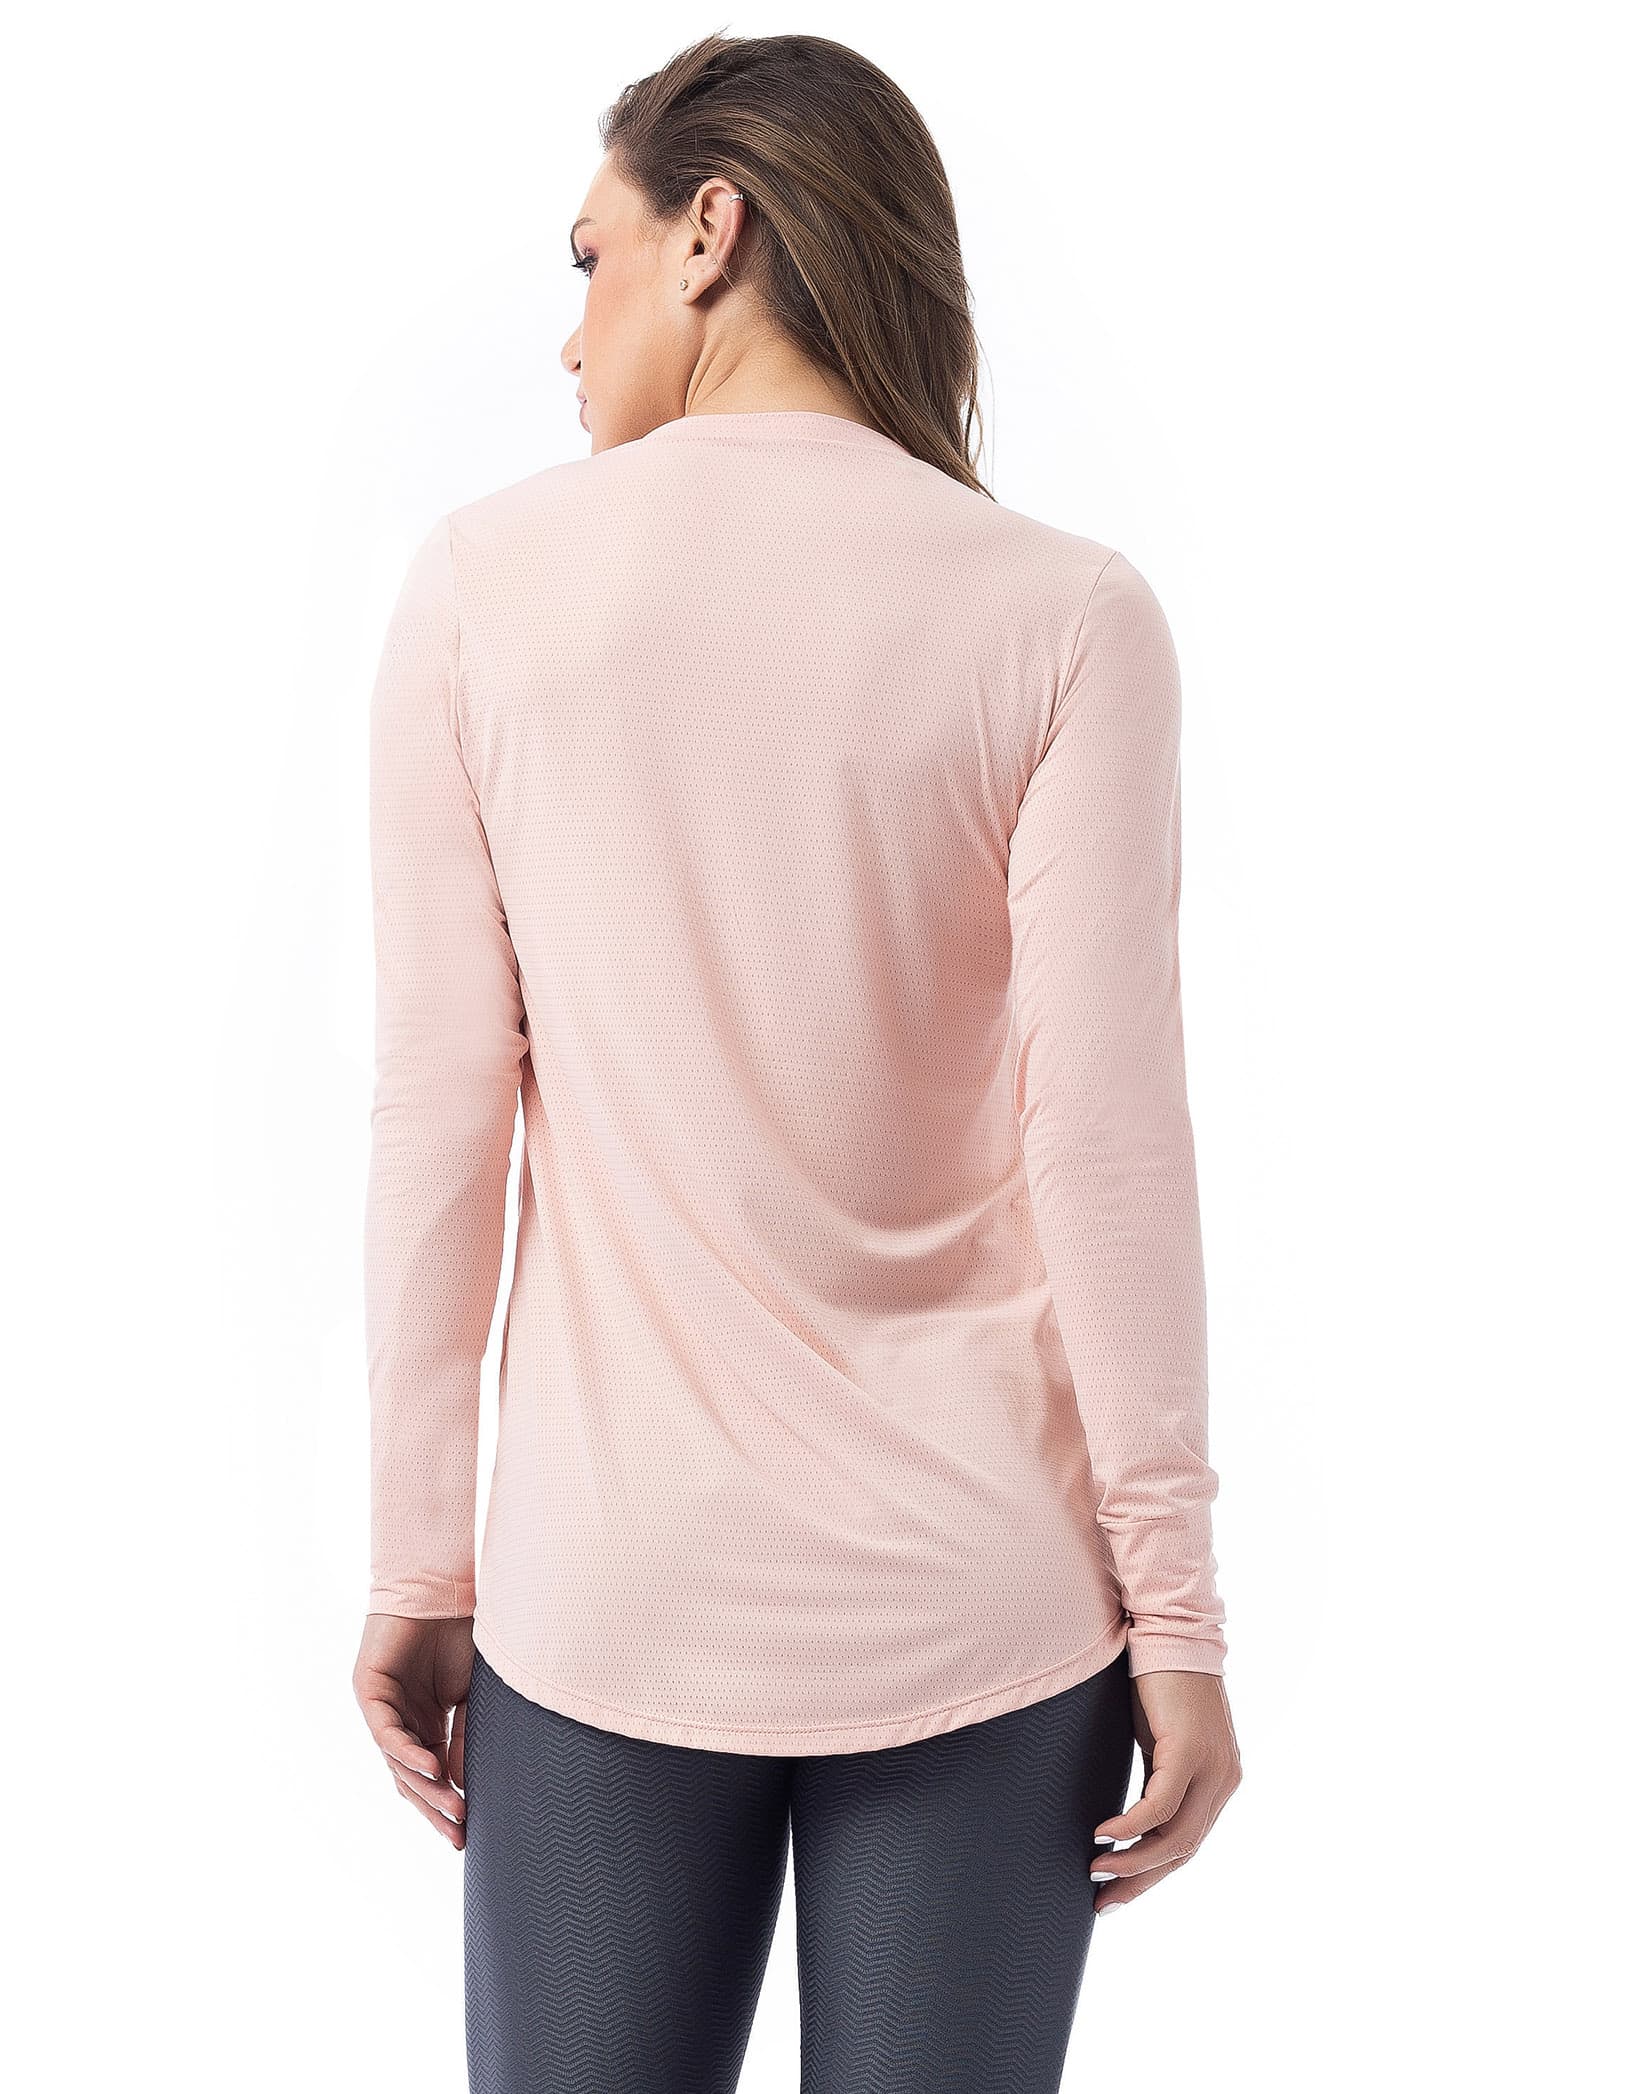 Vestem - Dry Fit Long Sleeve Shirt Janice Nude - BML16C0048